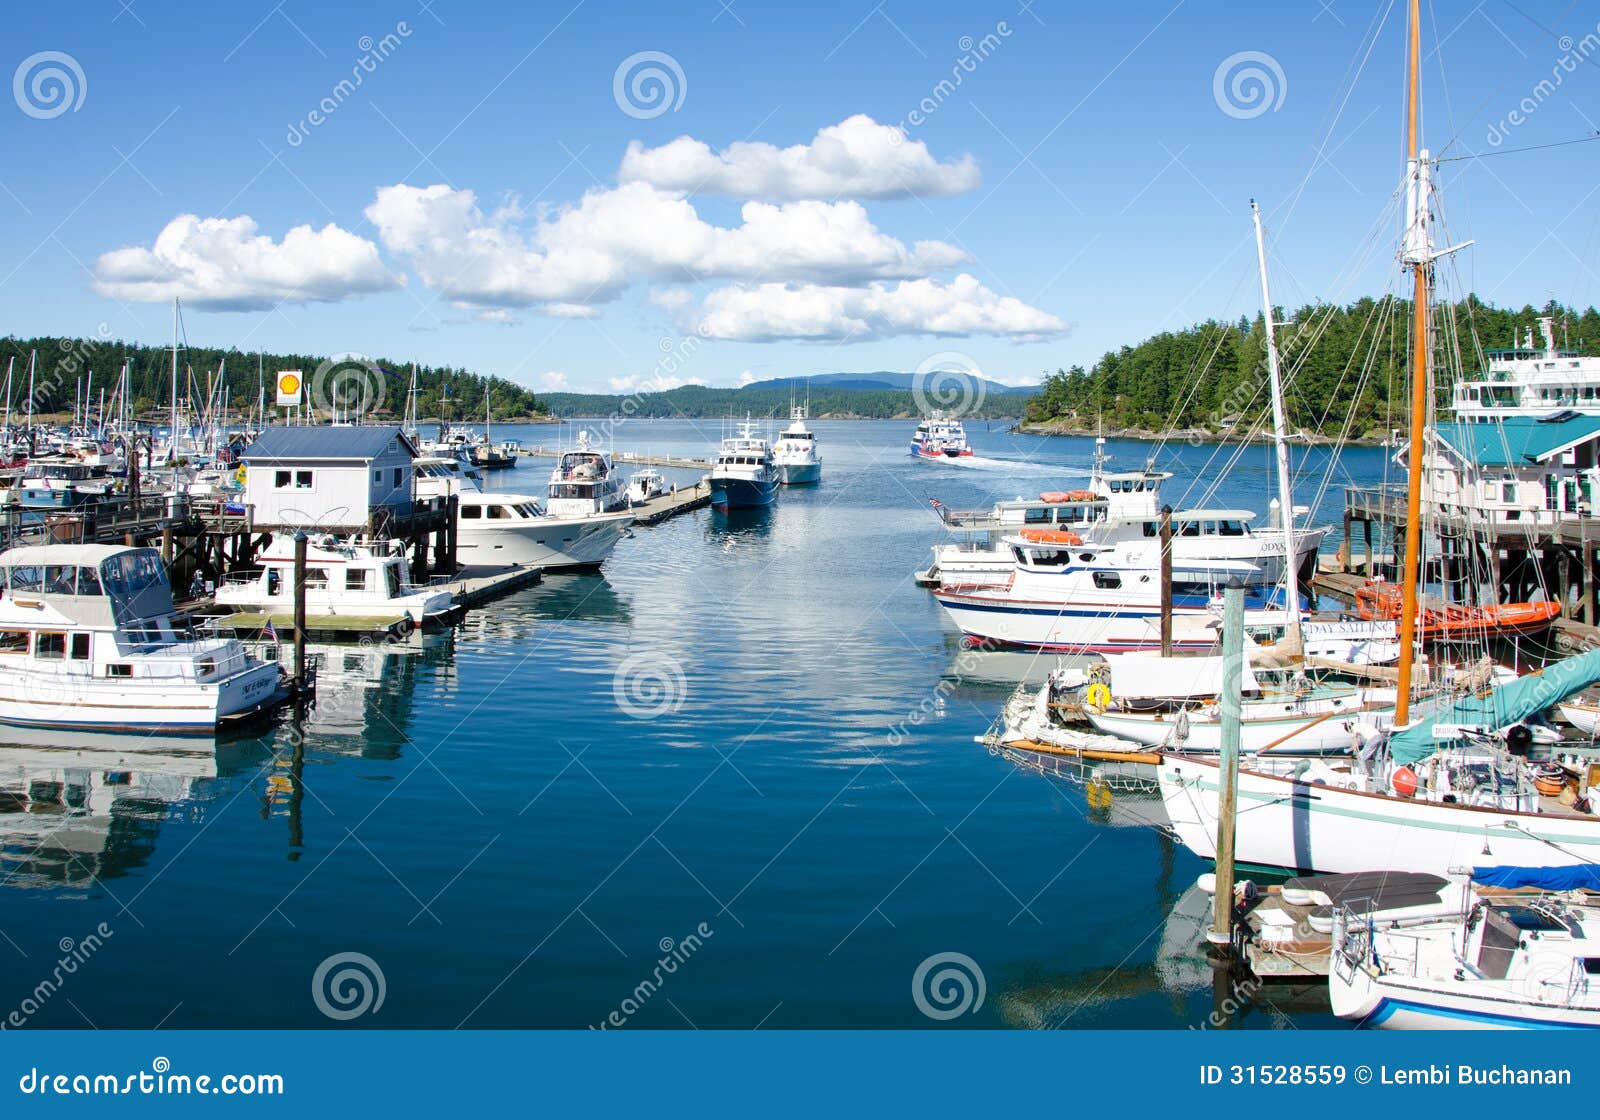 Boats Moored At Marina In Friday Harbor Editorial Stock Image - Image ...